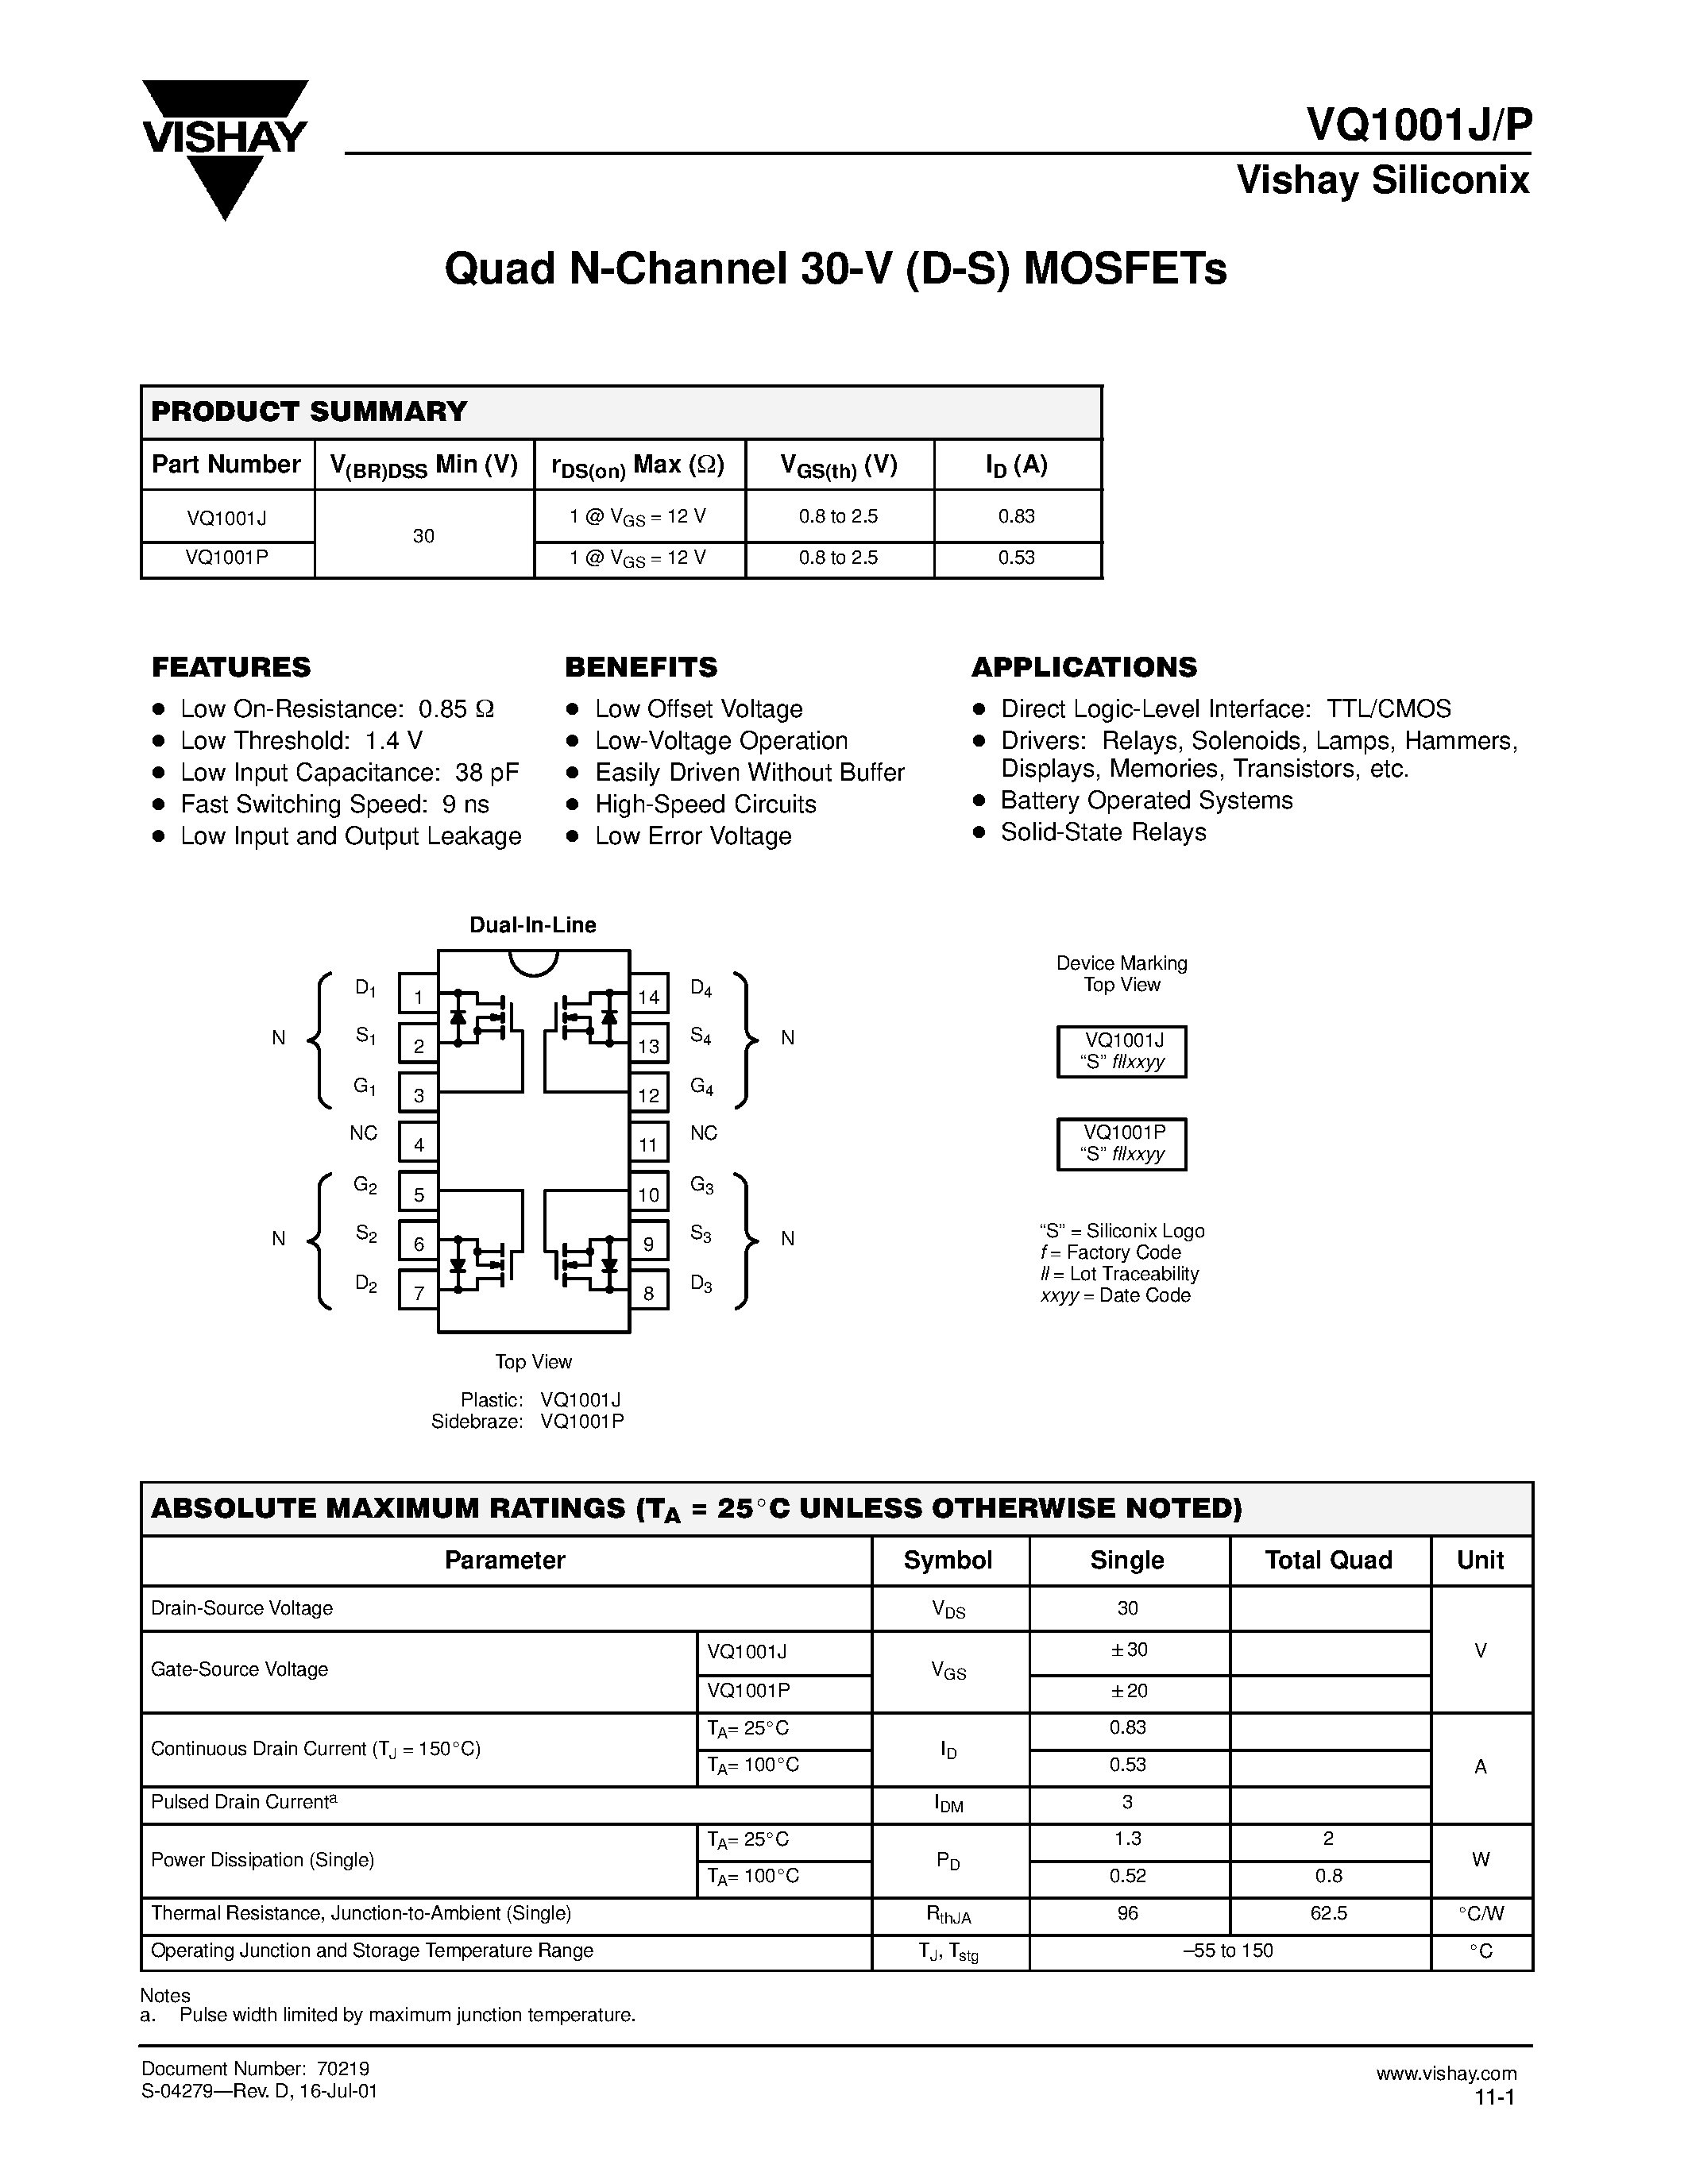 Даташит VQ1001P - Quad N-Channel 30-V (D-S) MOSFETs страница 1